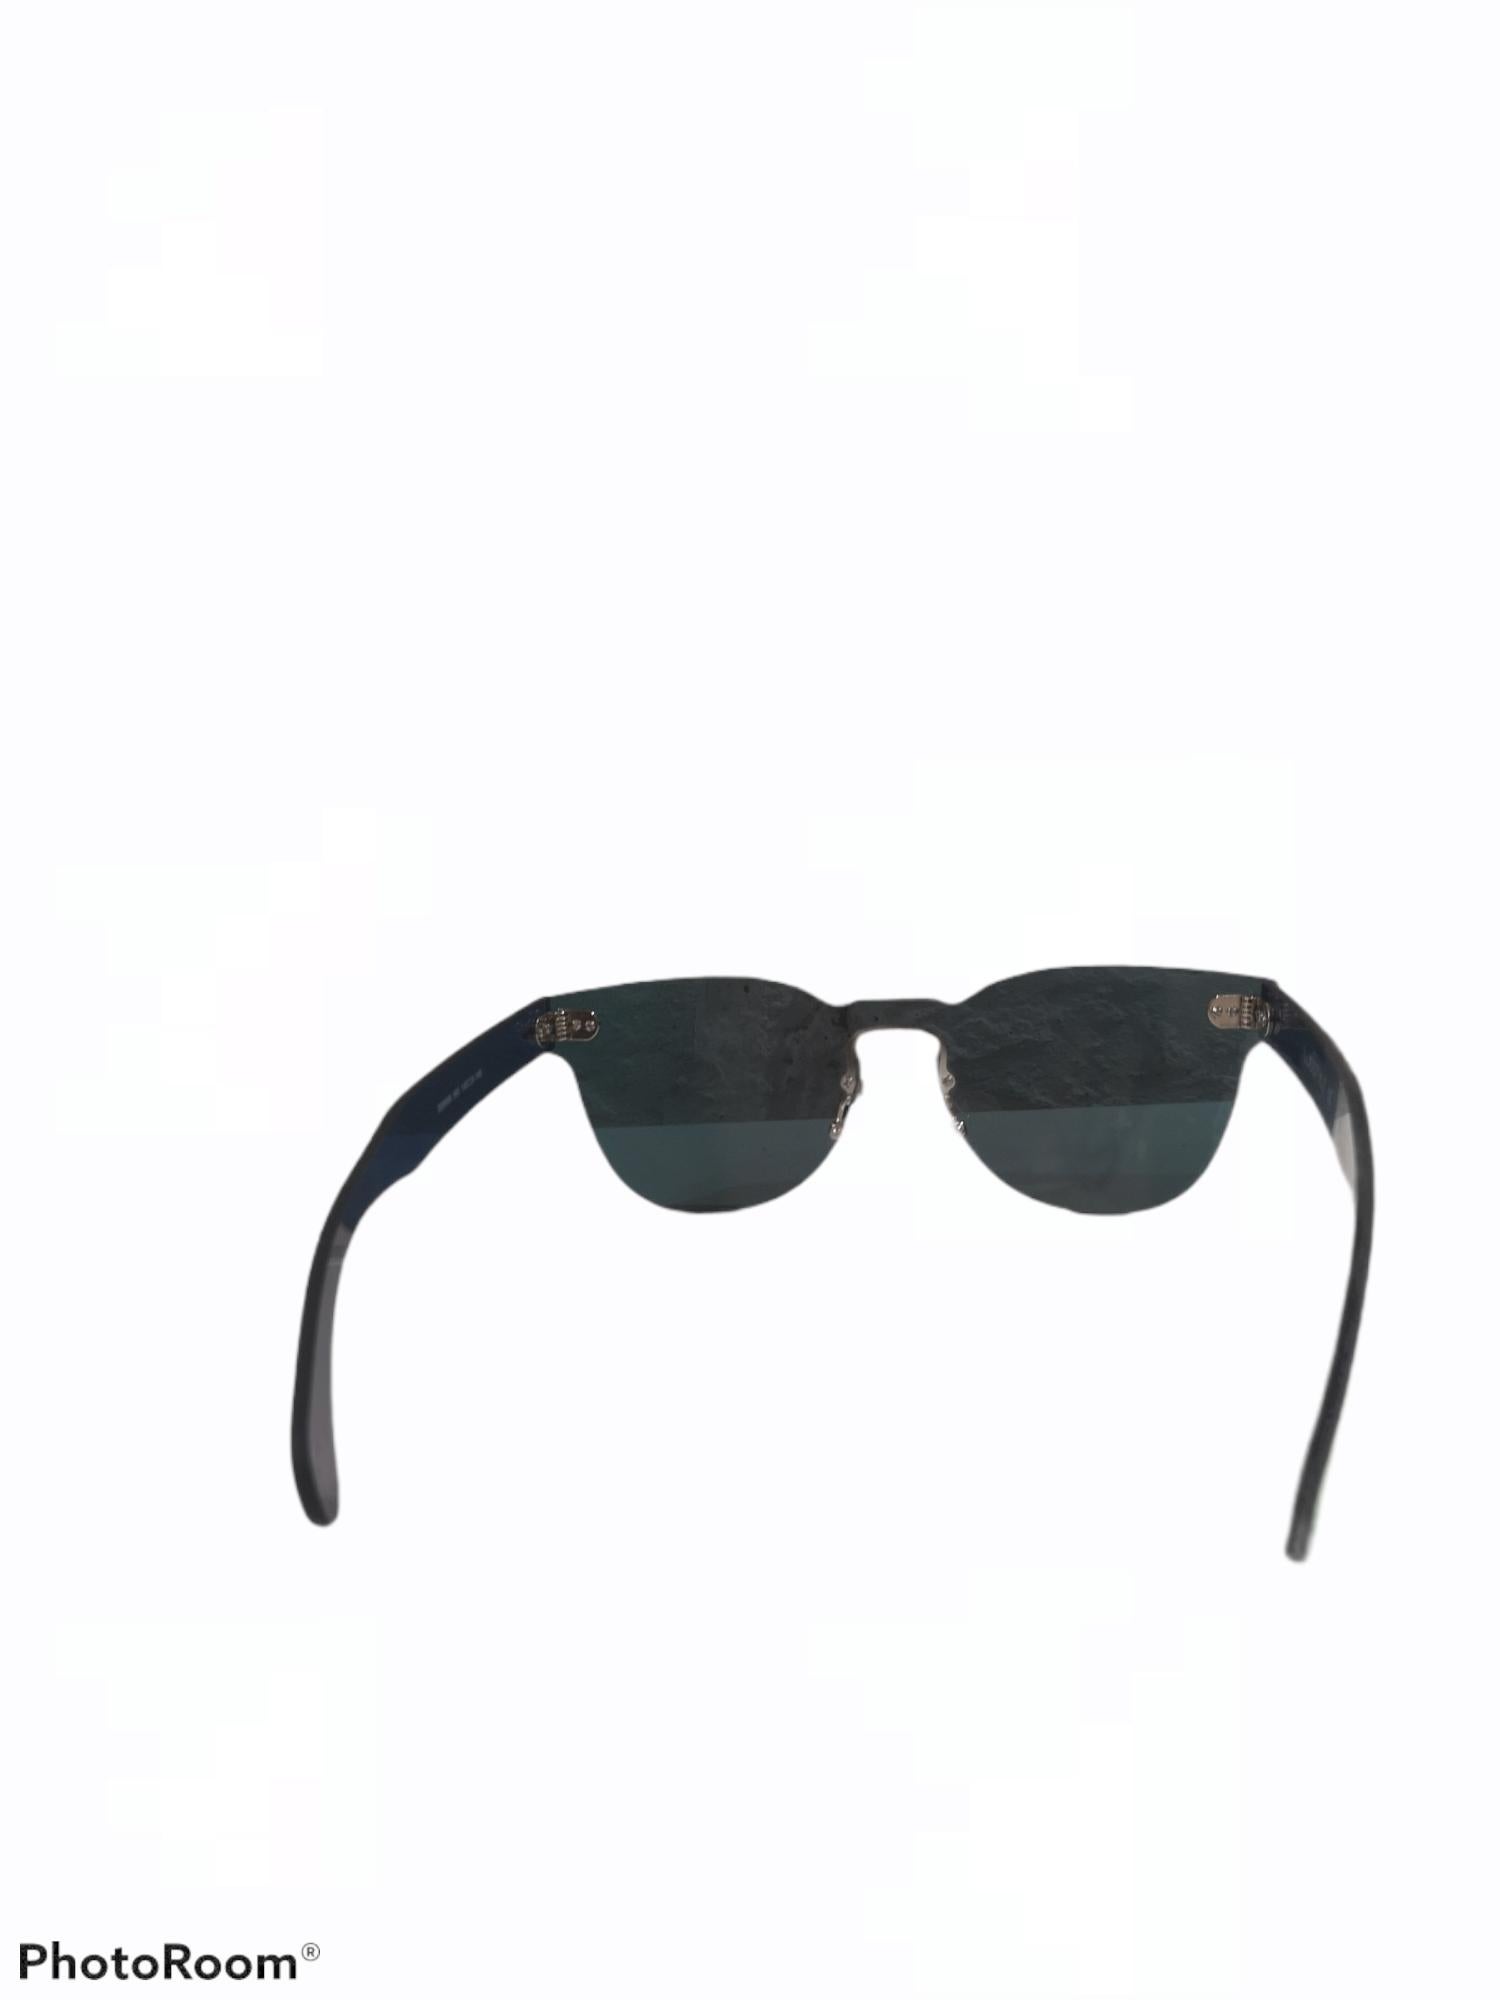 Women's or Men's Orange mirrored sunglasses